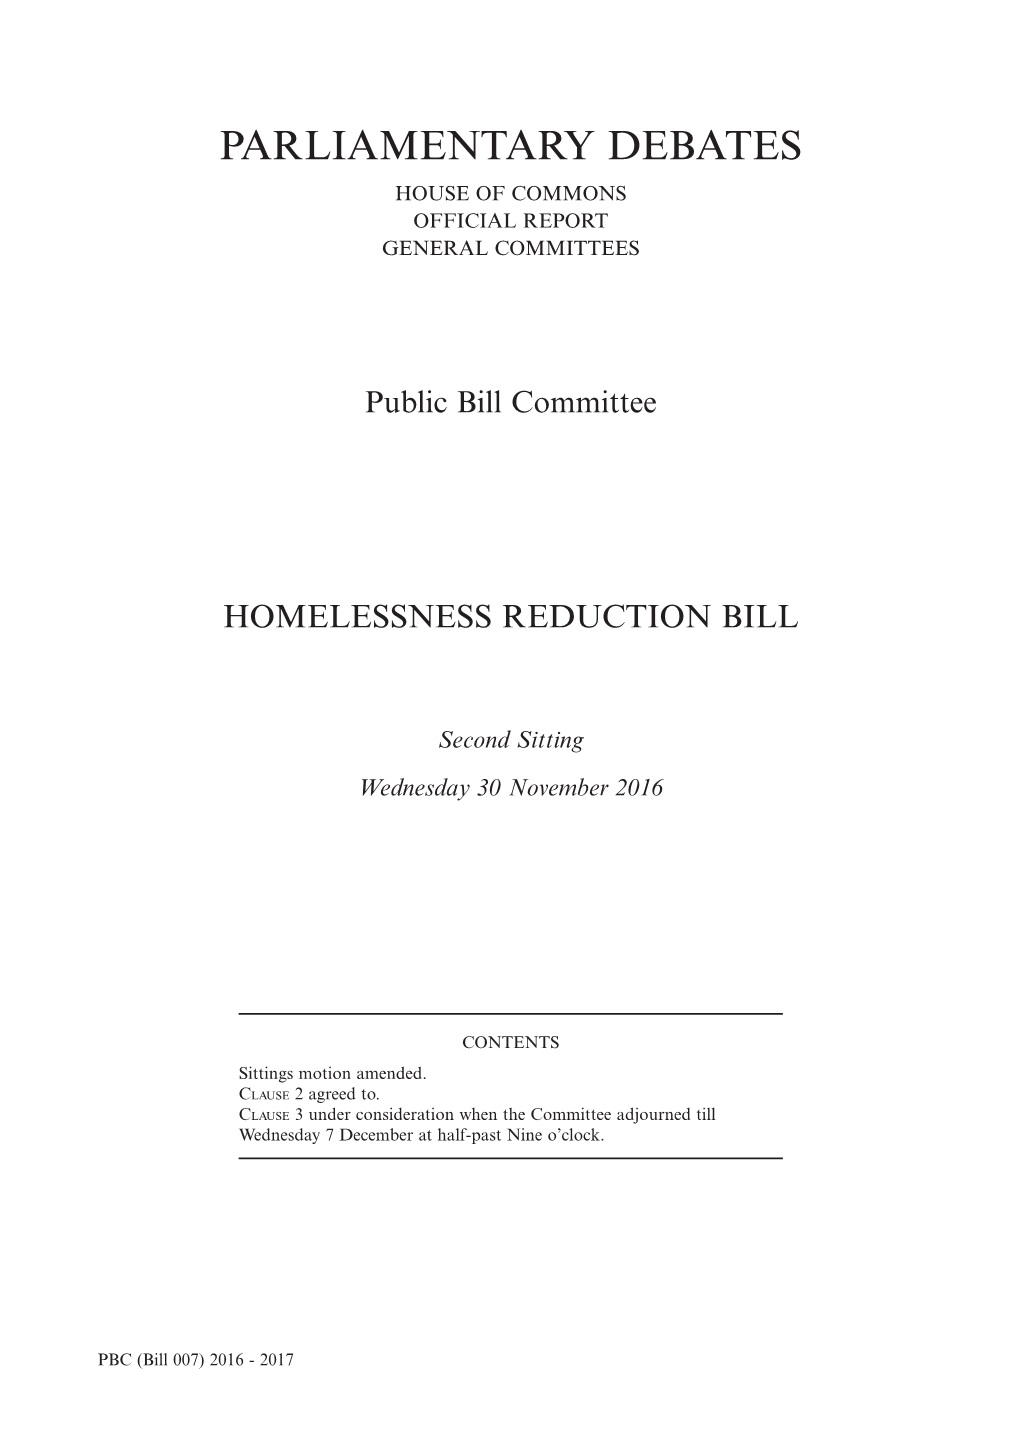 Homelessness Reduction Bill